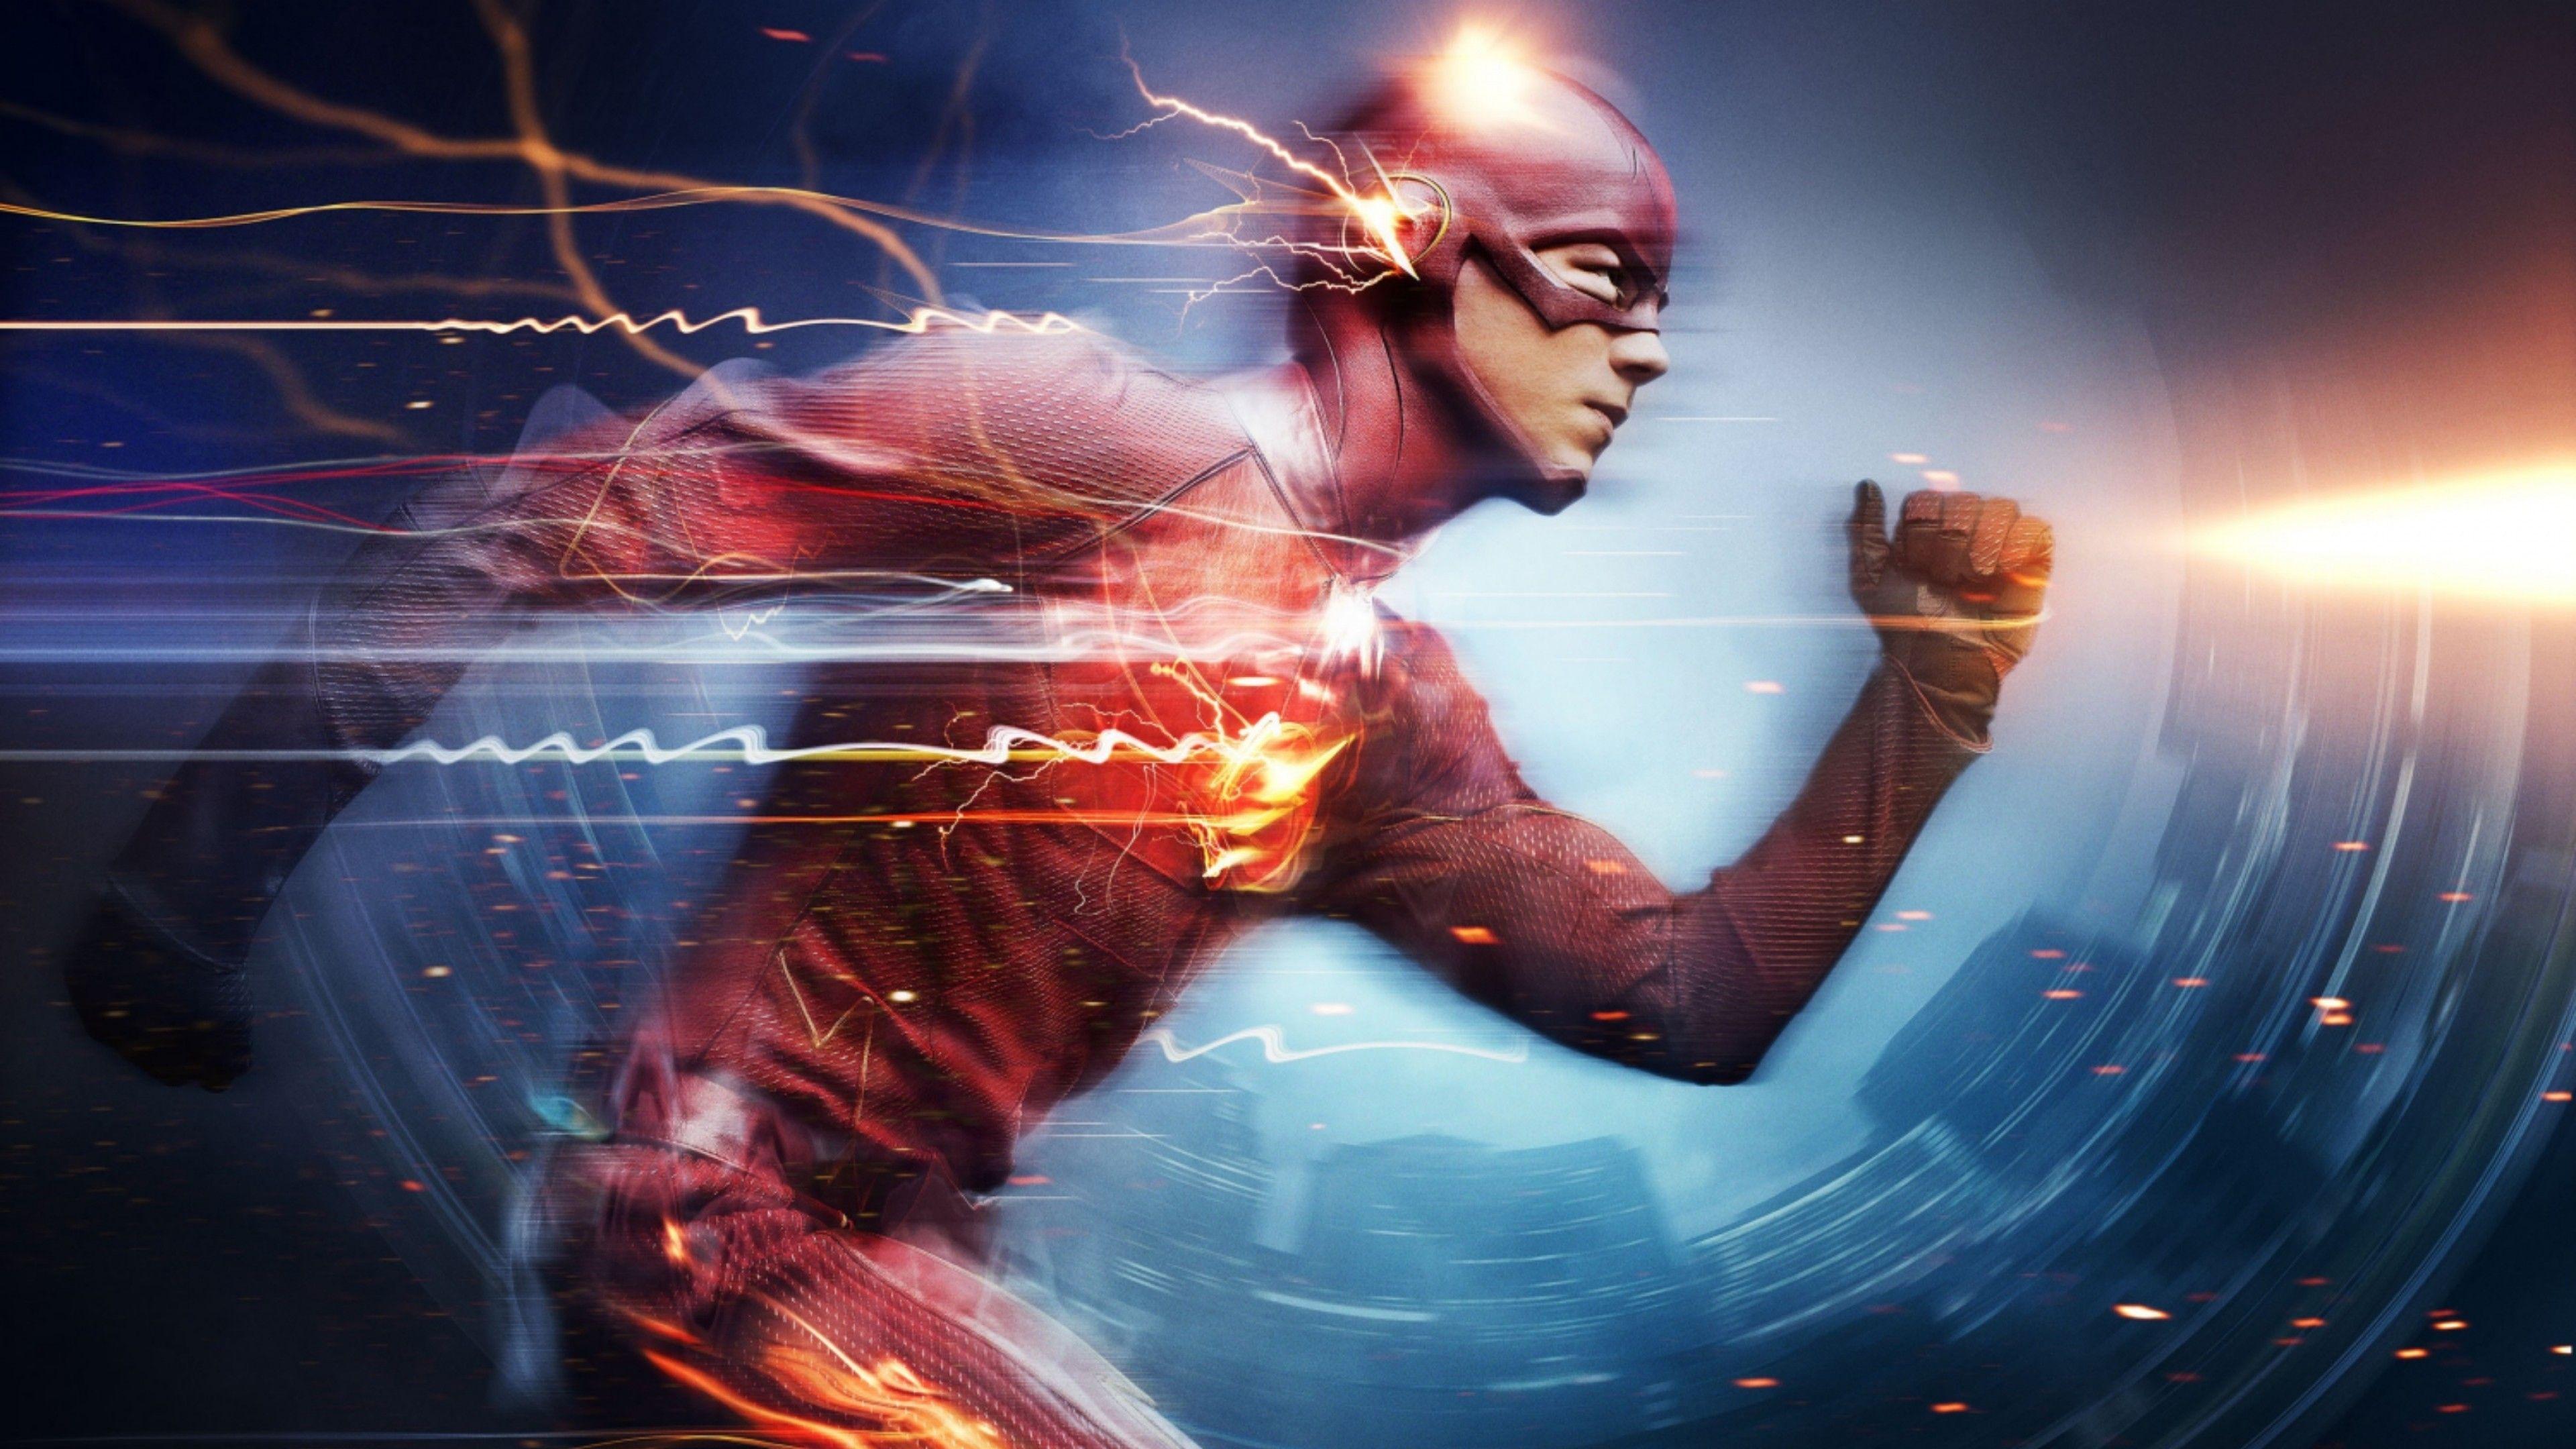 The Flash 4K Movie Wallpaper Free The Flash 4K Movie Background